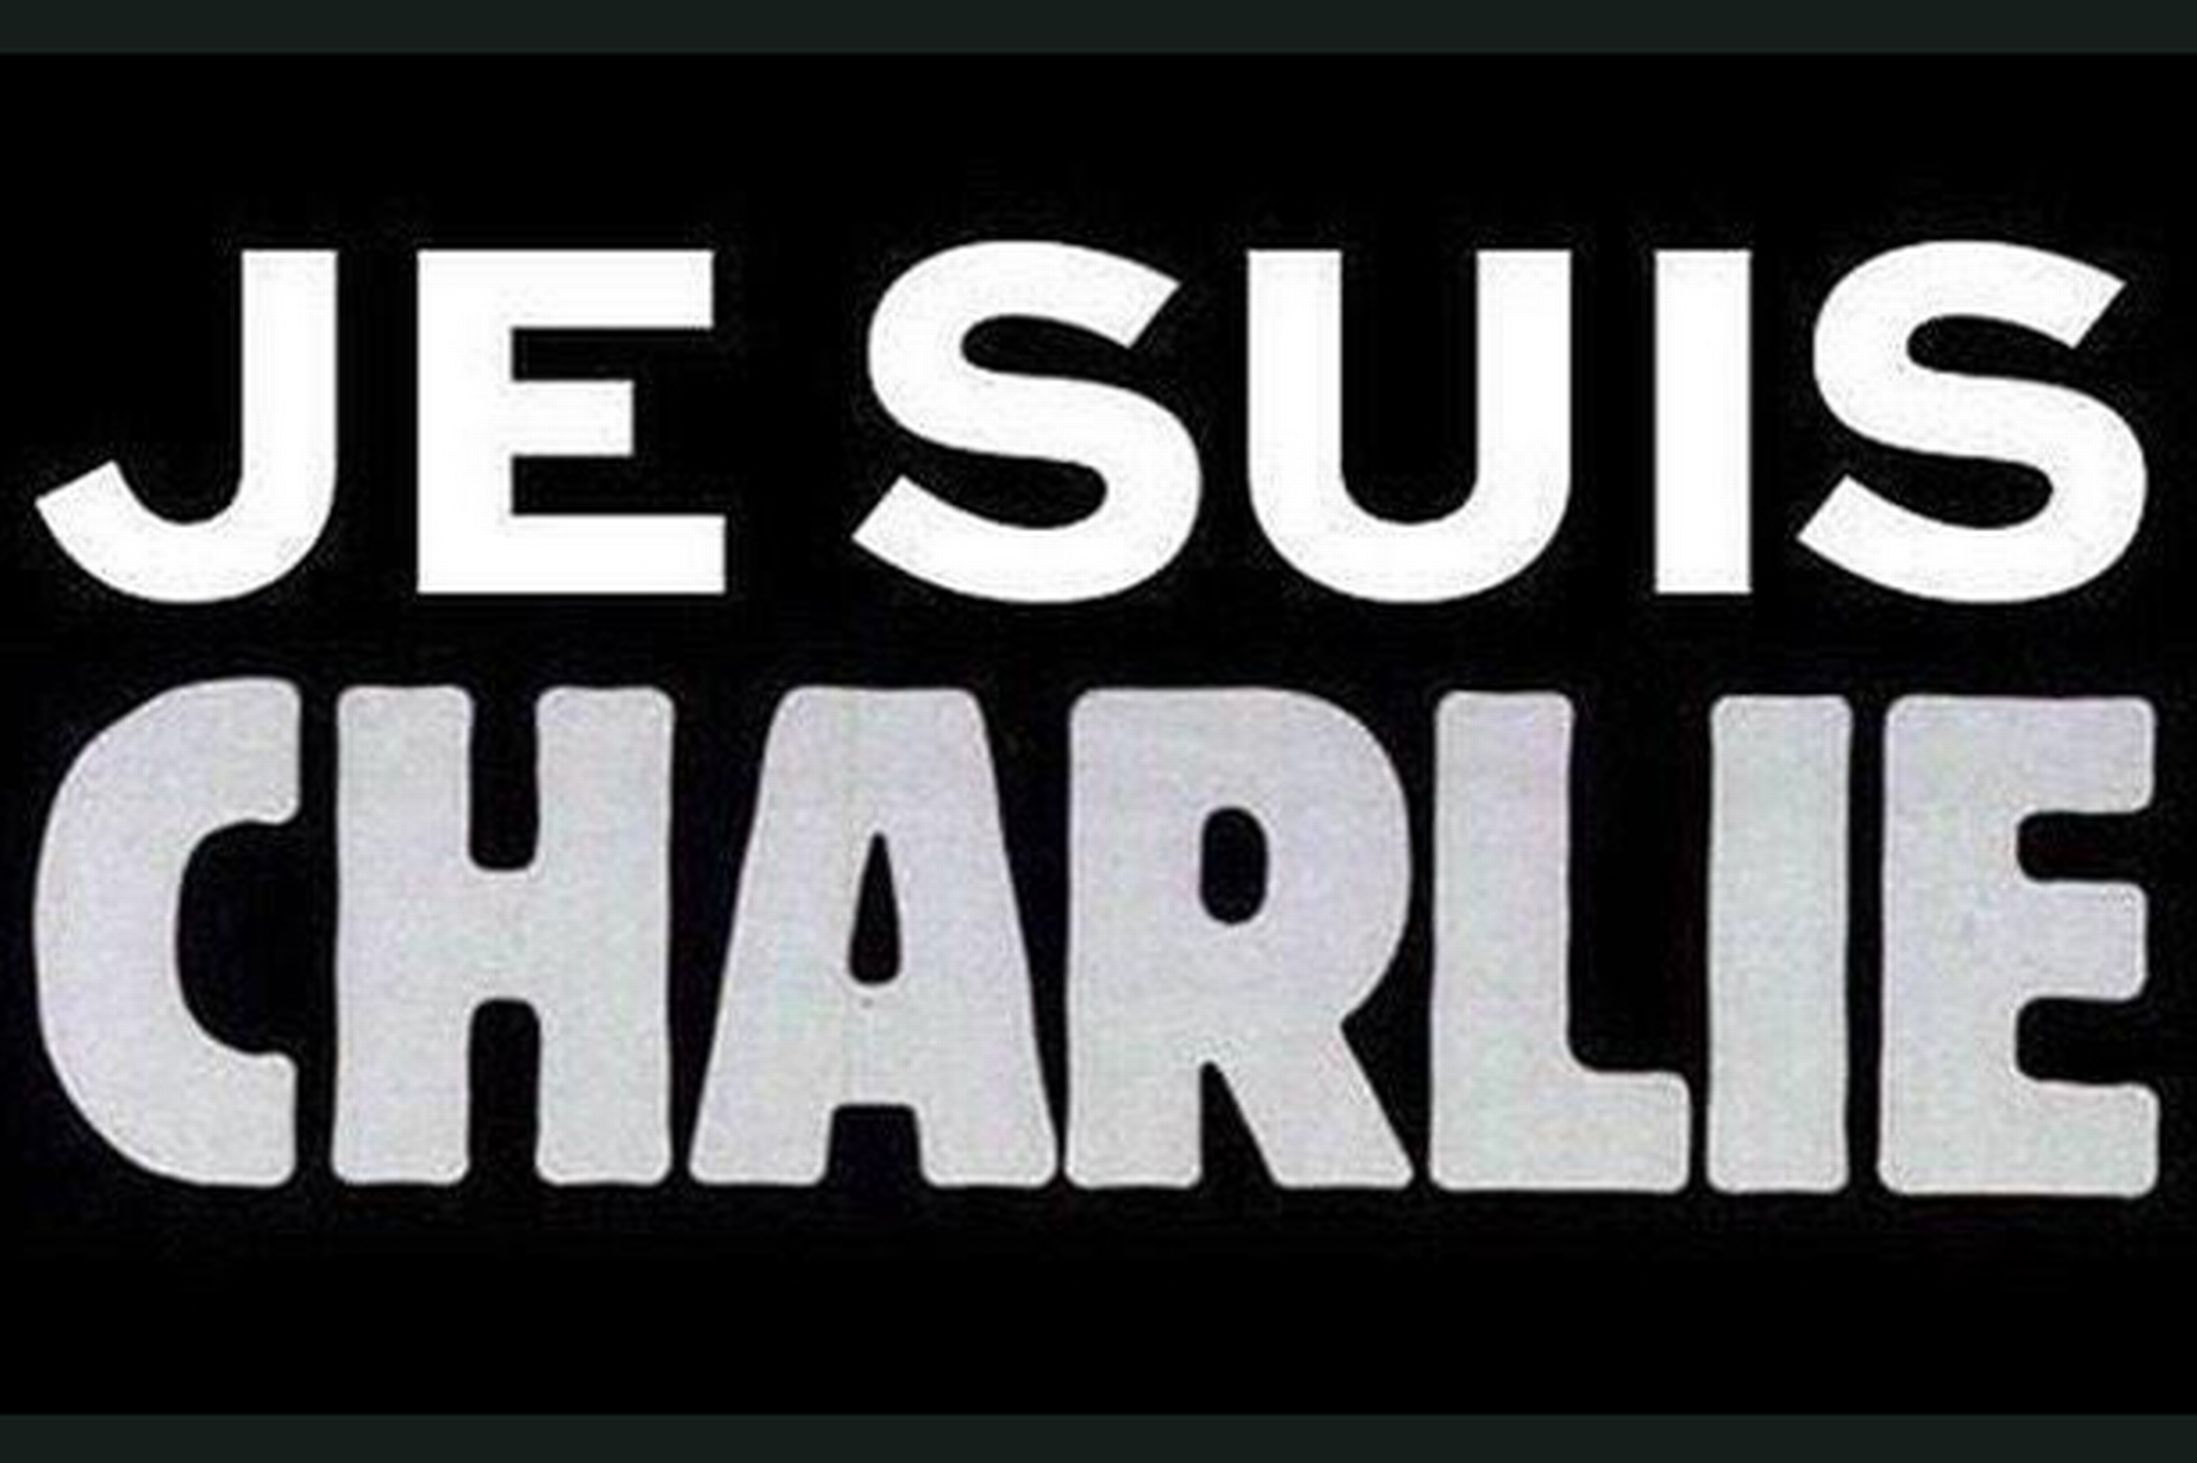 I am Charlie -- Charlie Hebdo